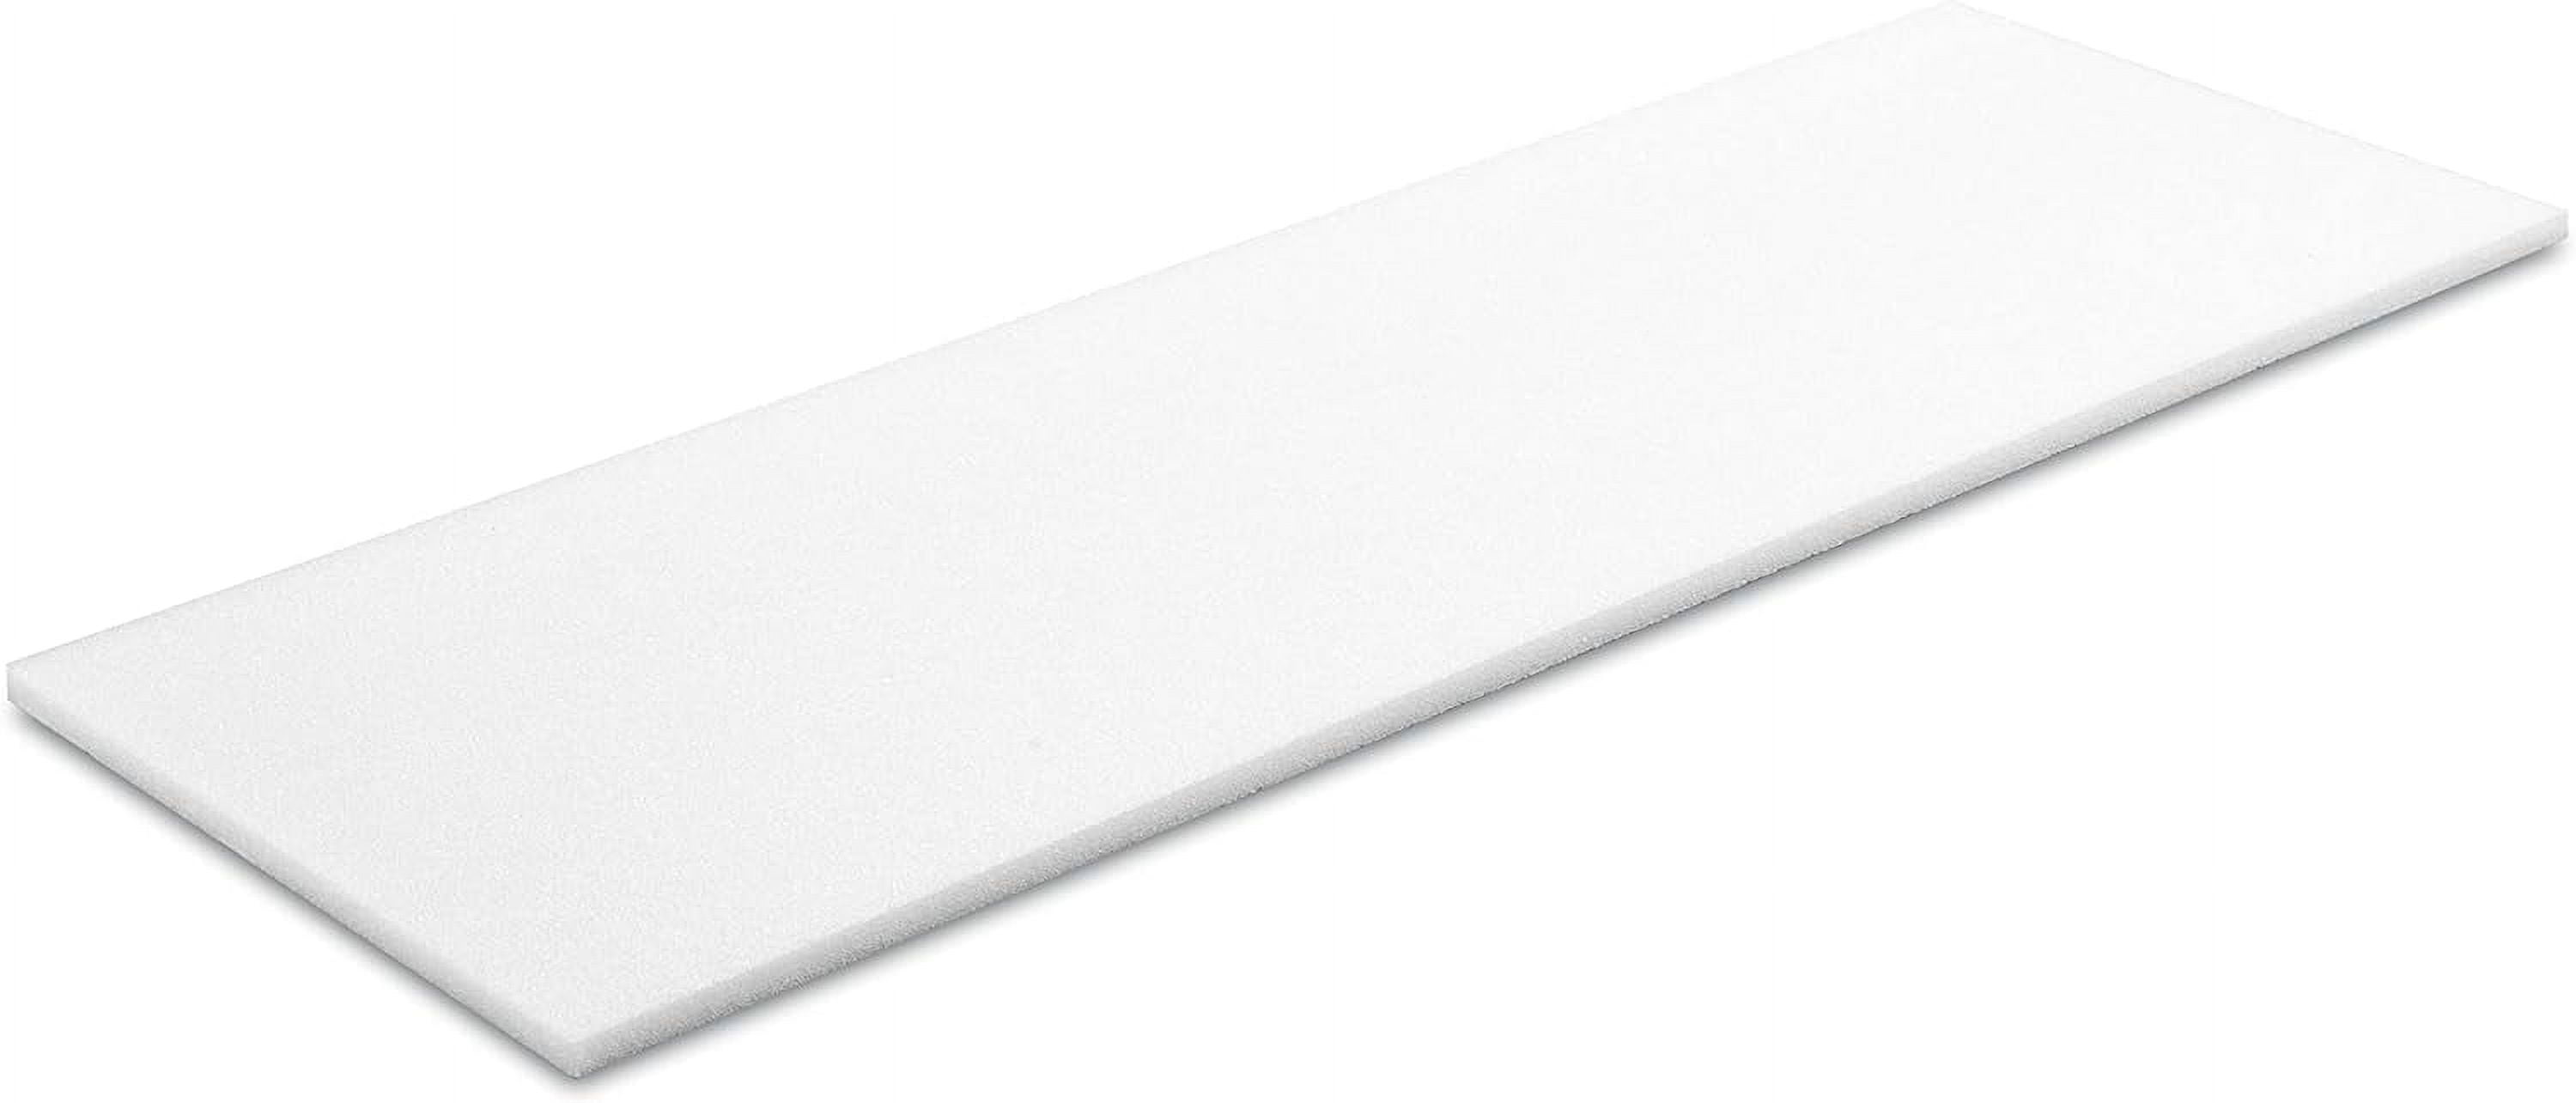 Polyethylene Foam Sheet/Roll - 48 x 1250', 1/16 Thick, P12, White - M.  Conley Company